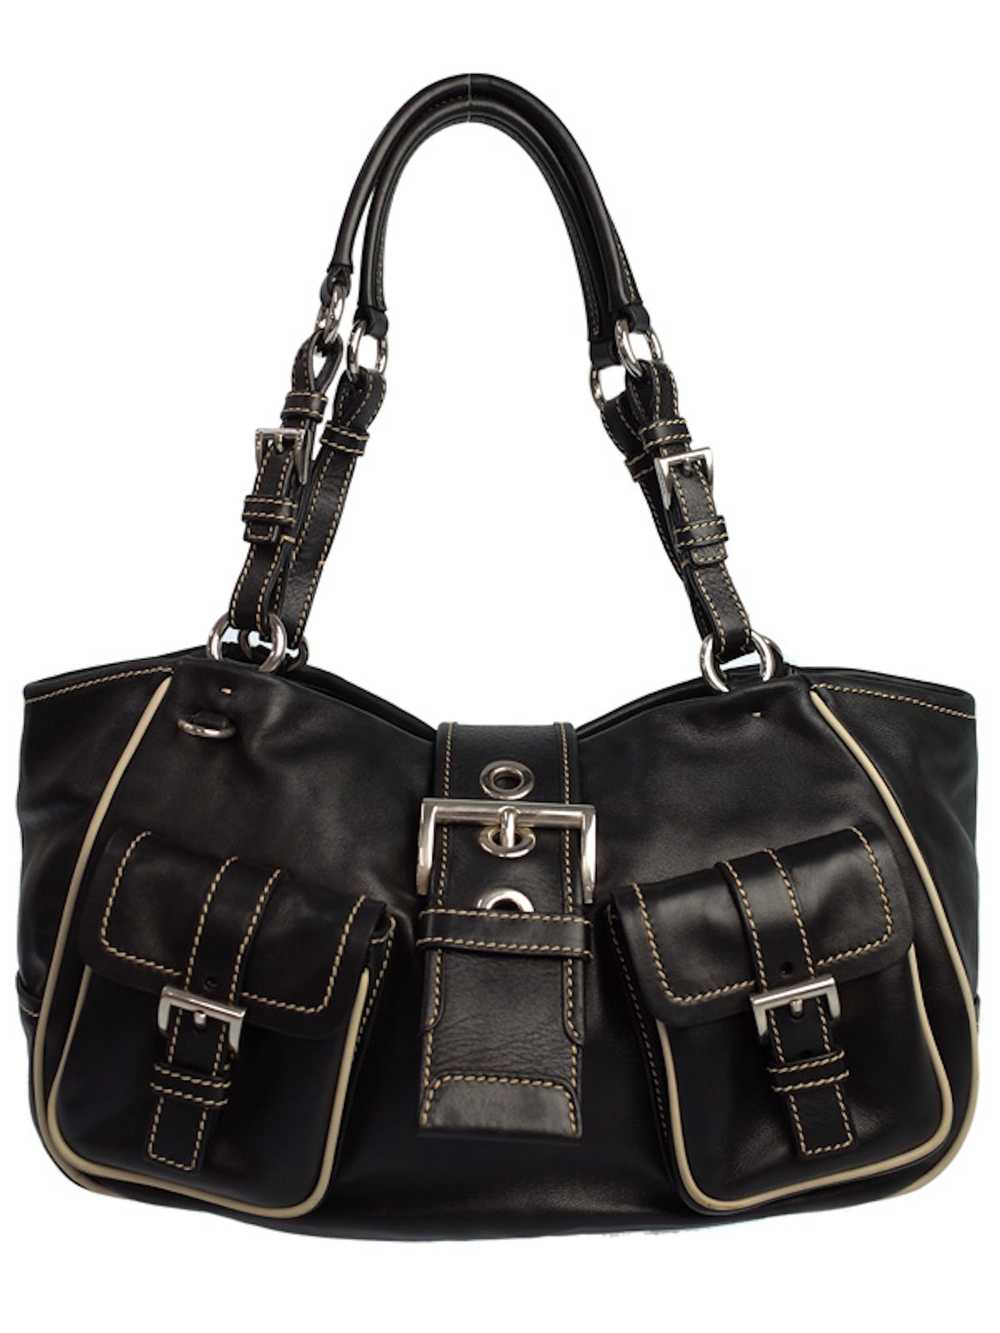 Prada Prada Leather Shoulder Bag Black - image 1